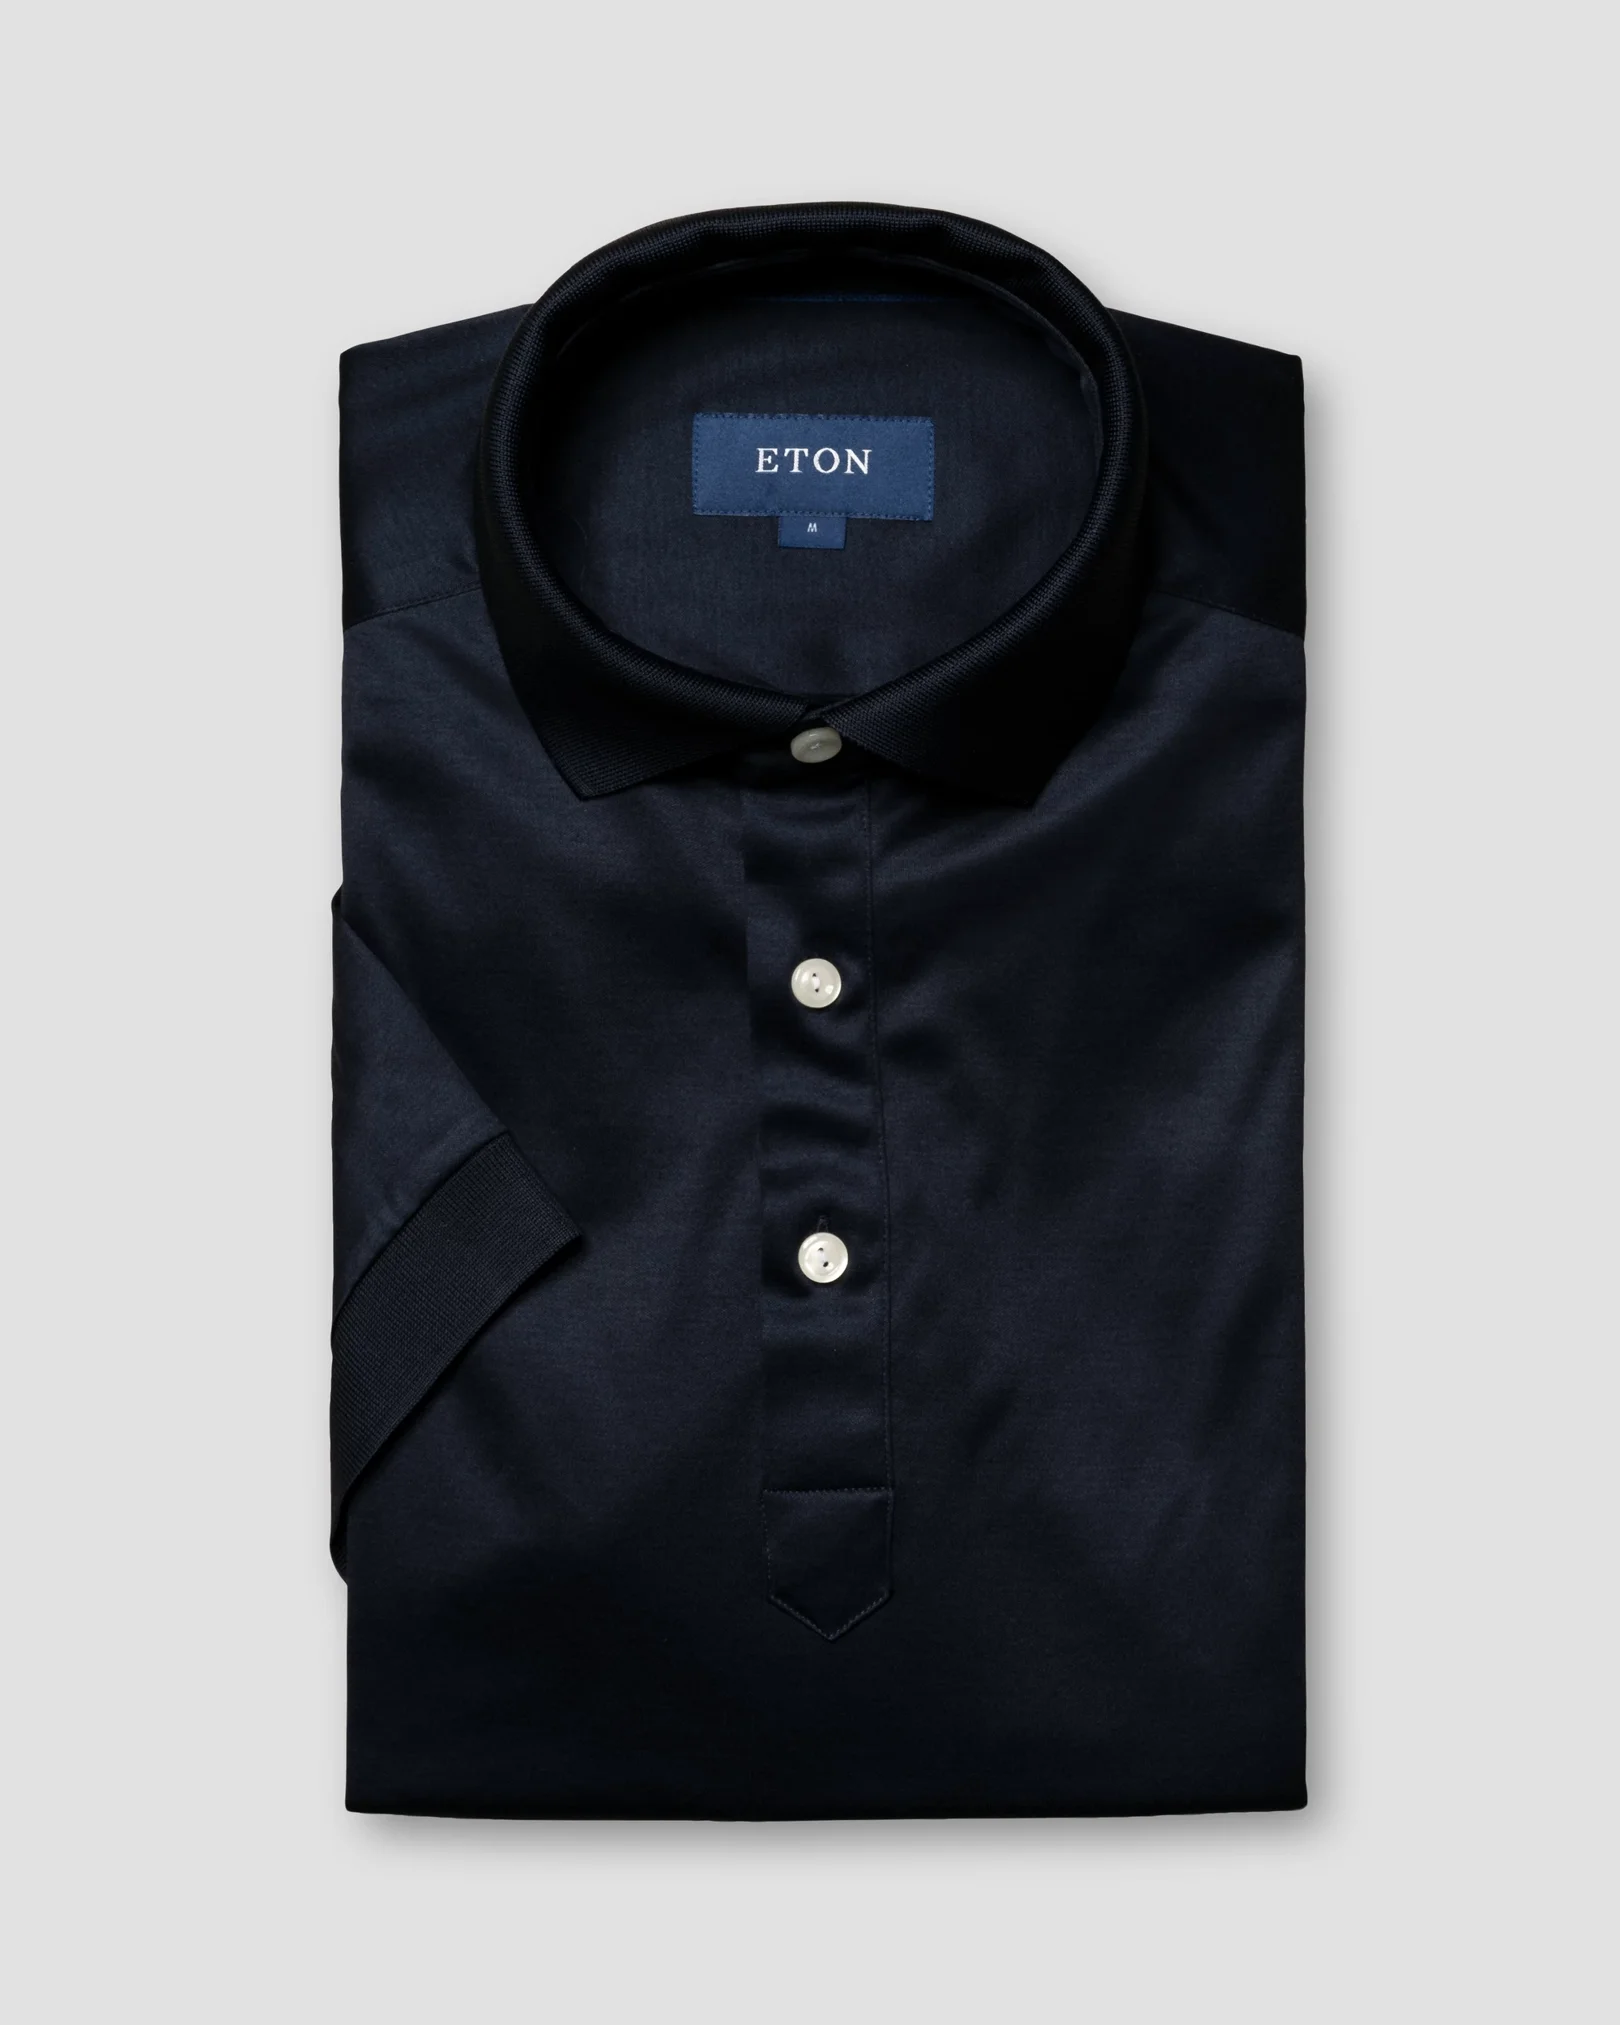 Eton - navy blue jersey short sleeve